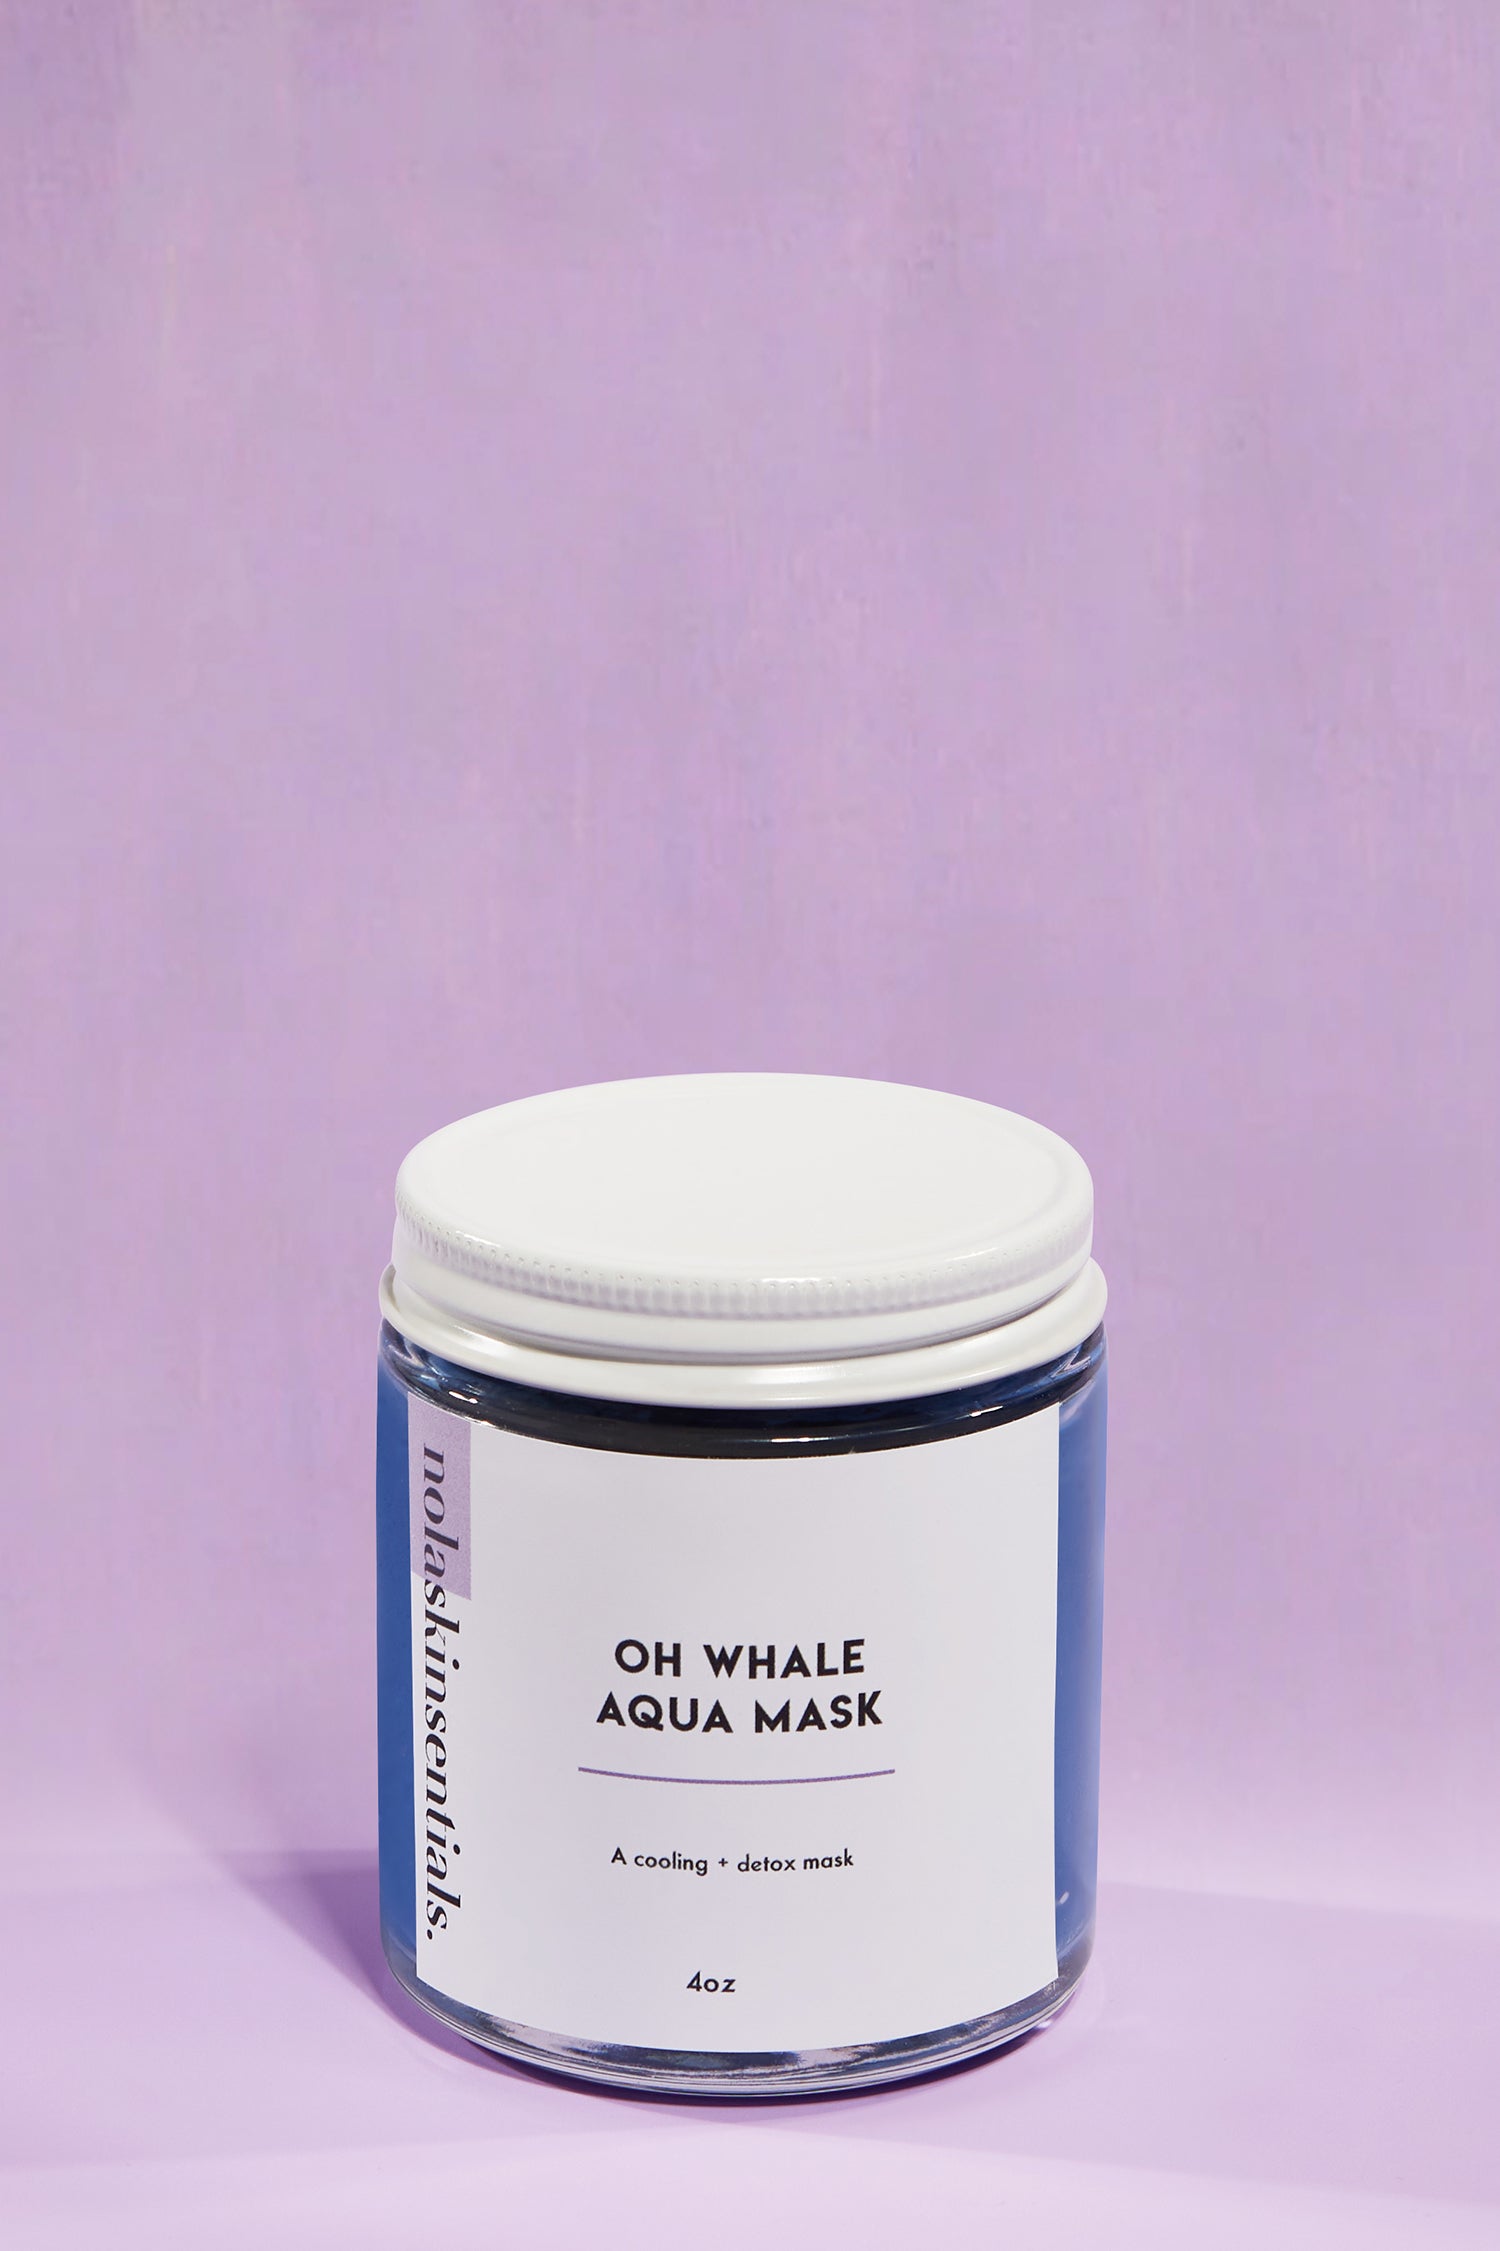 Oh Whale Aqua Mask